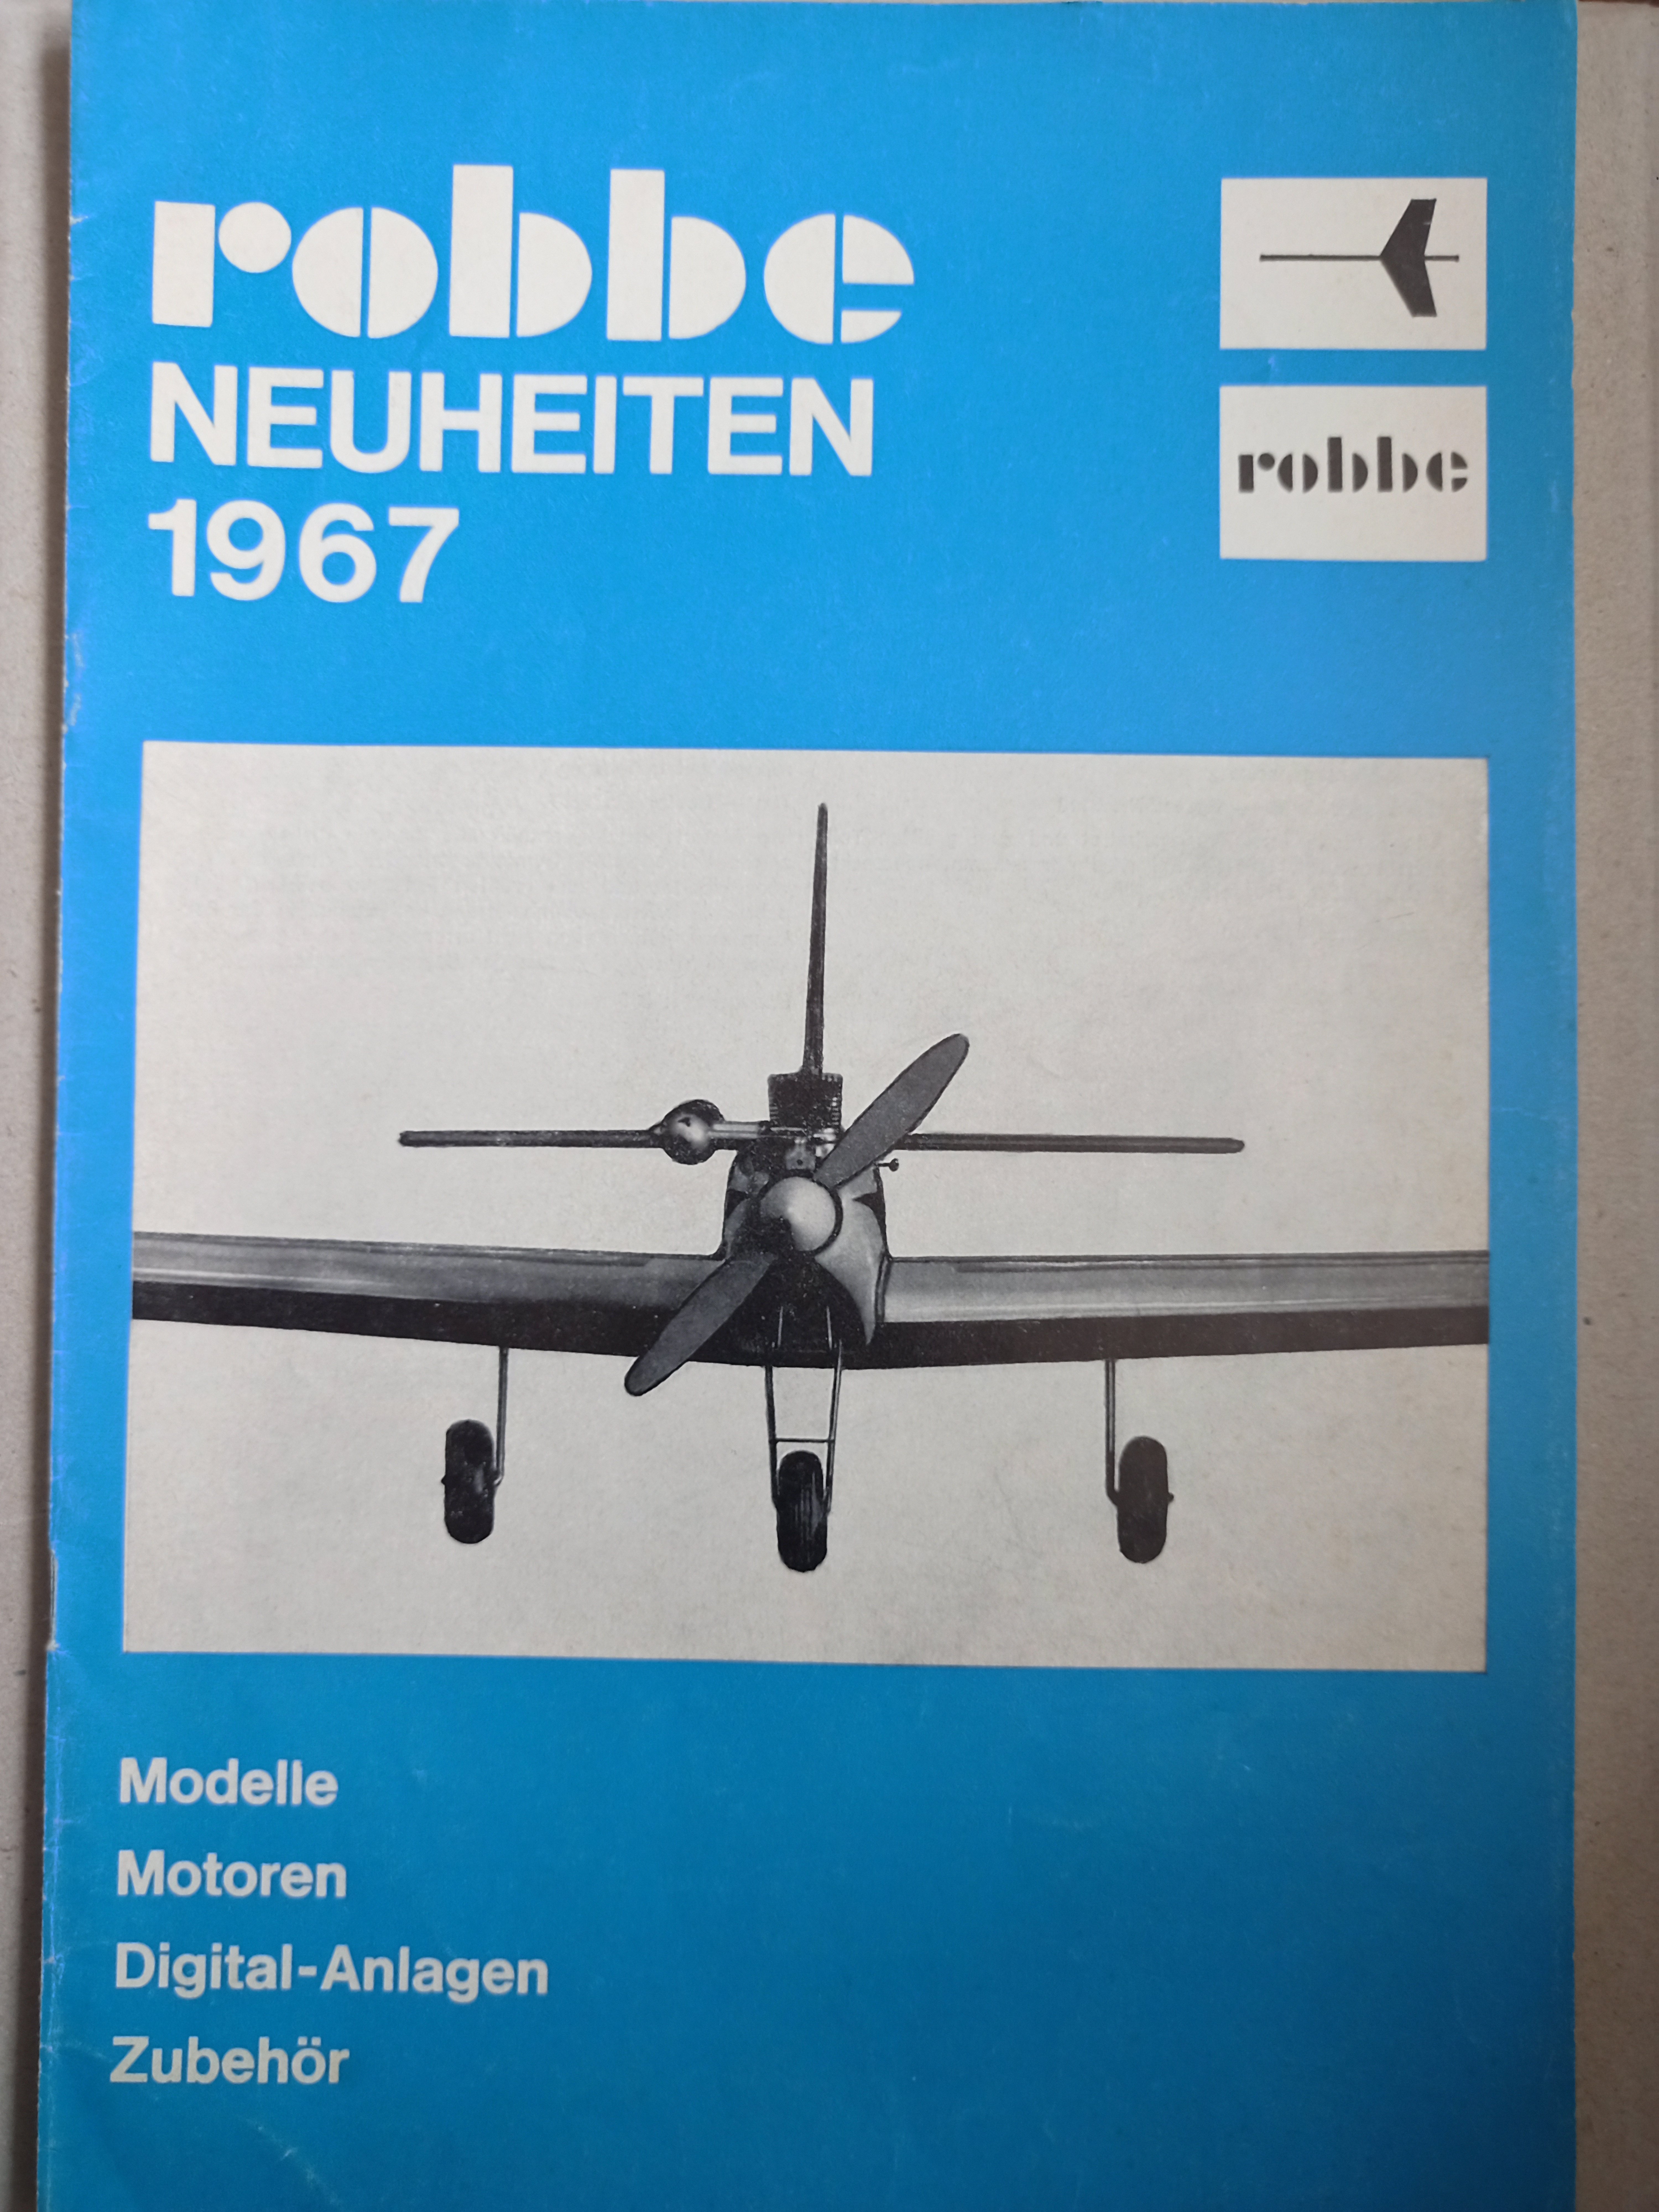 robbe Neuheiten 1967 (Deutsches Segelflugmuseum mit Modellflug CC BY-NC-SA)